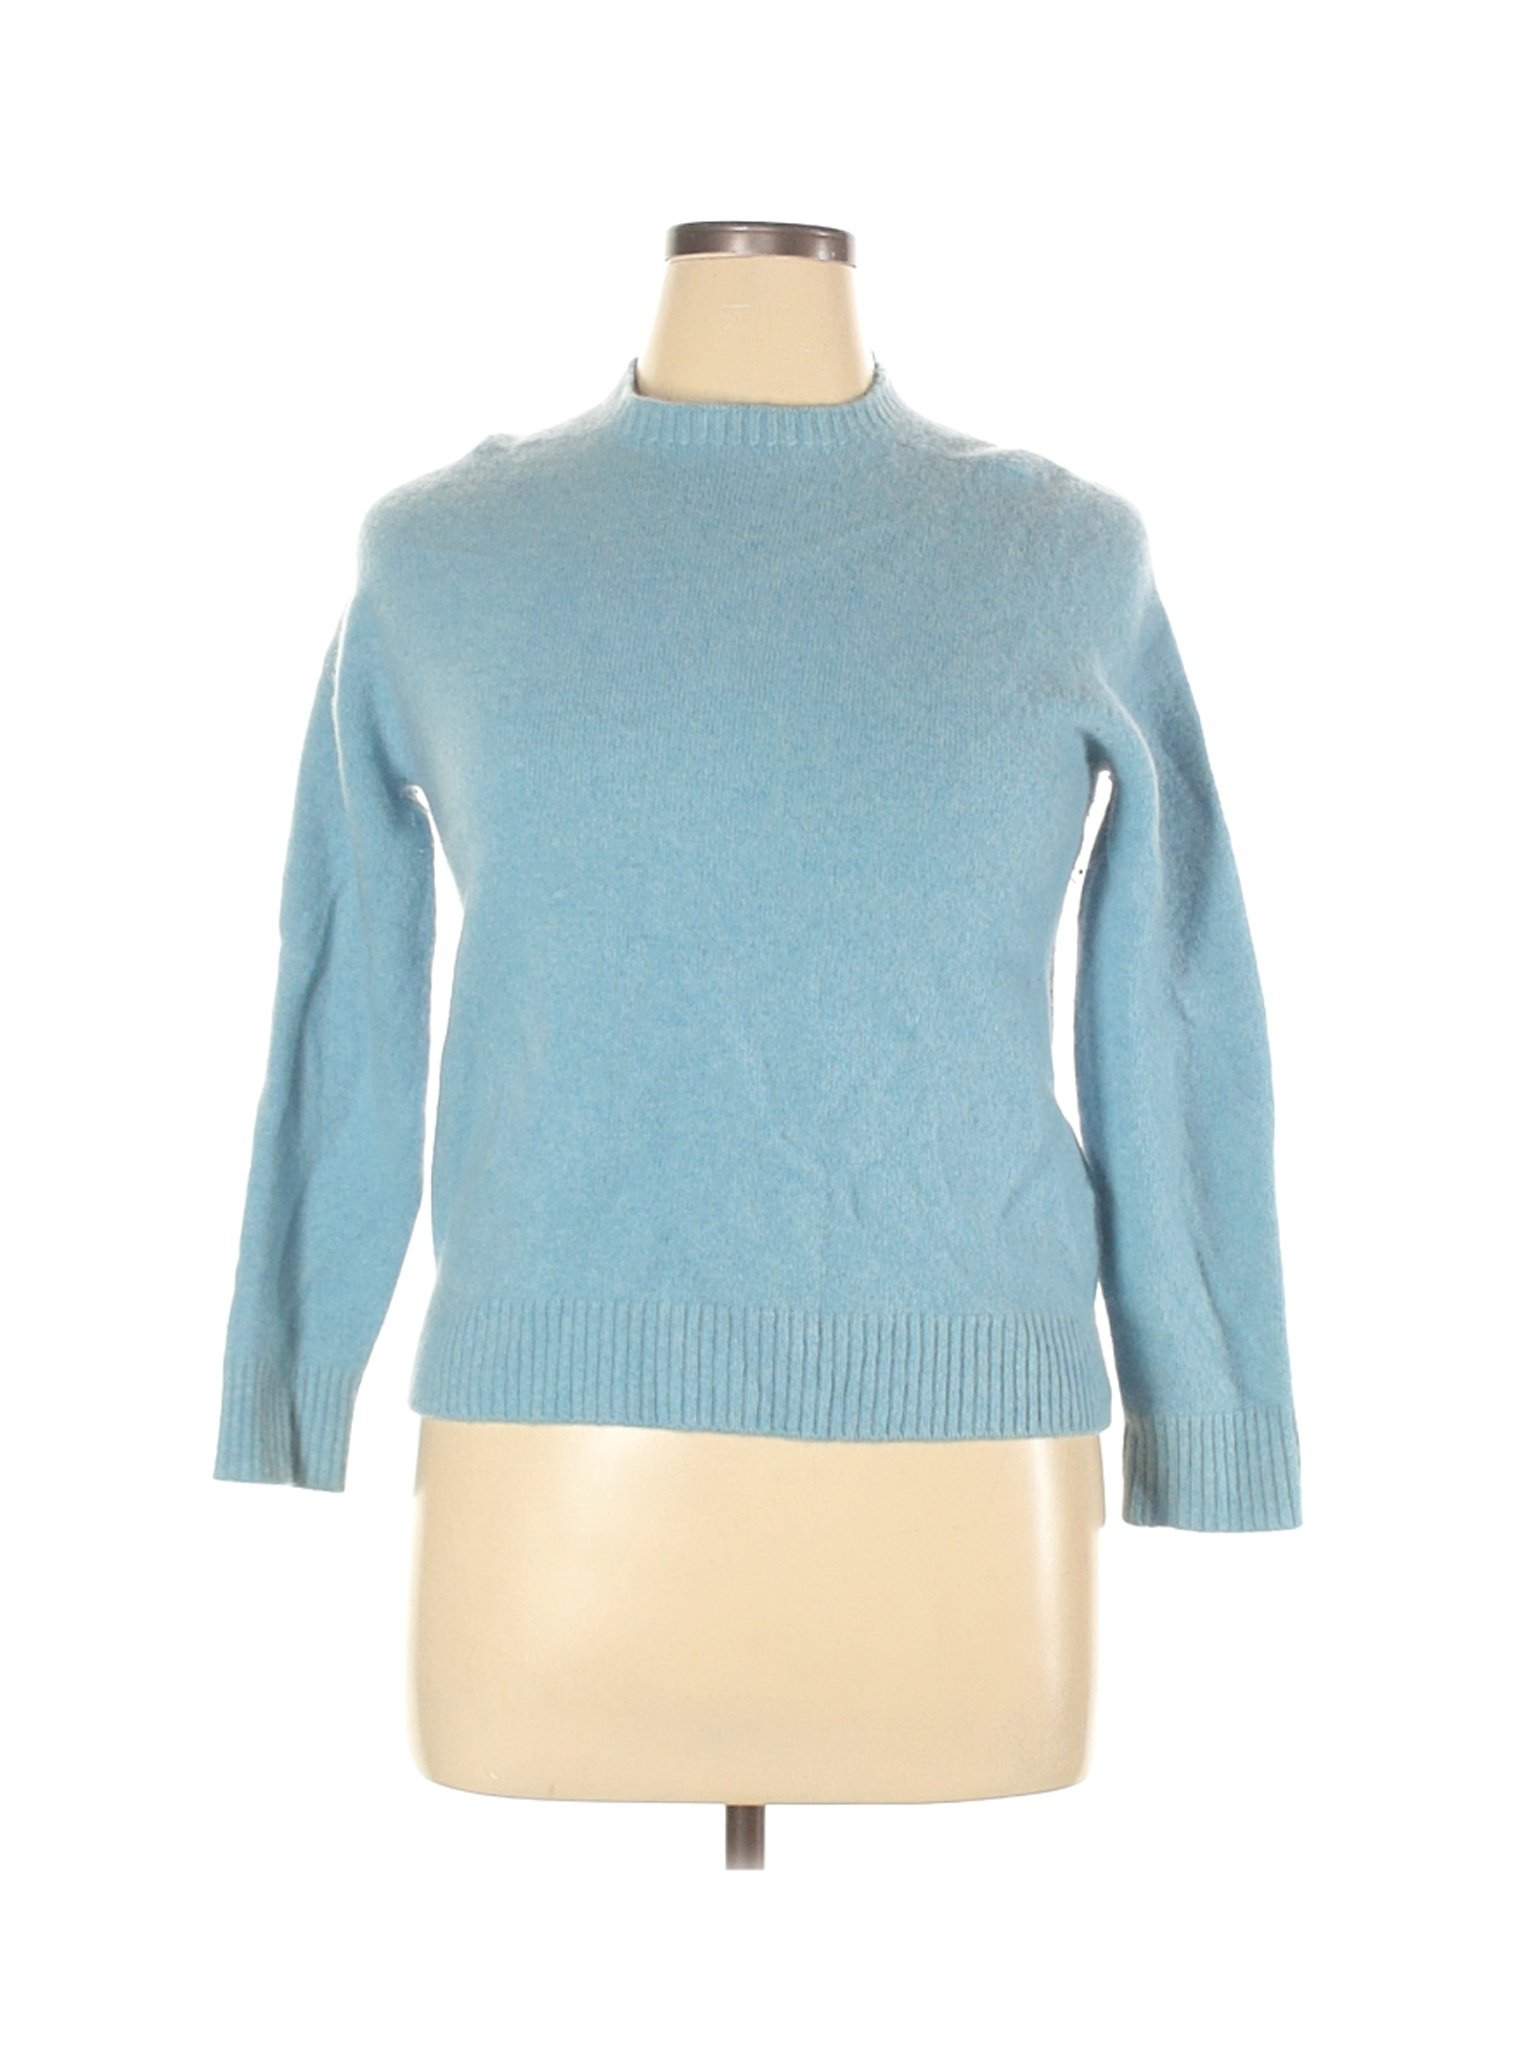 Lands' End Women Blue Wool Pullover Sweater XL | eBay